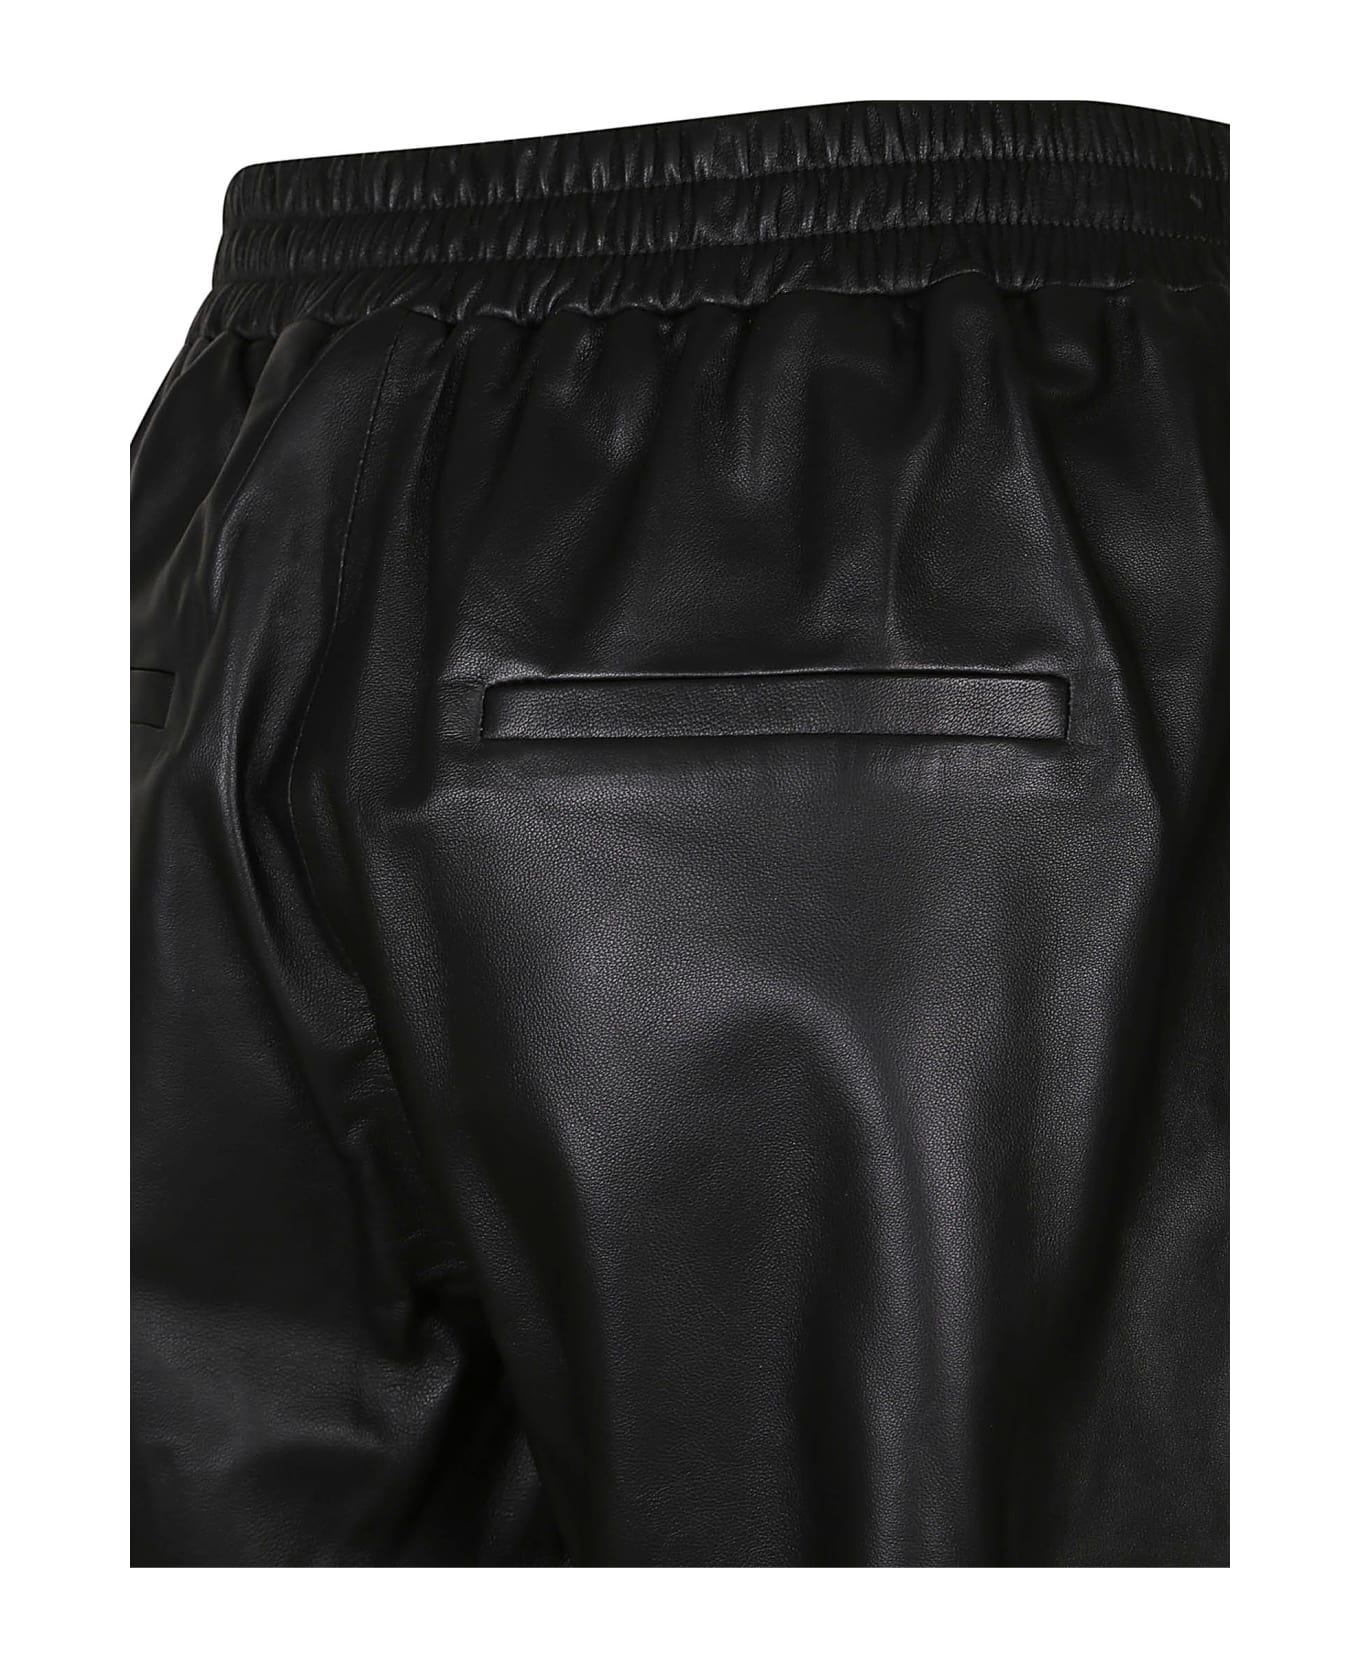 ARMA Trousers Black - Black